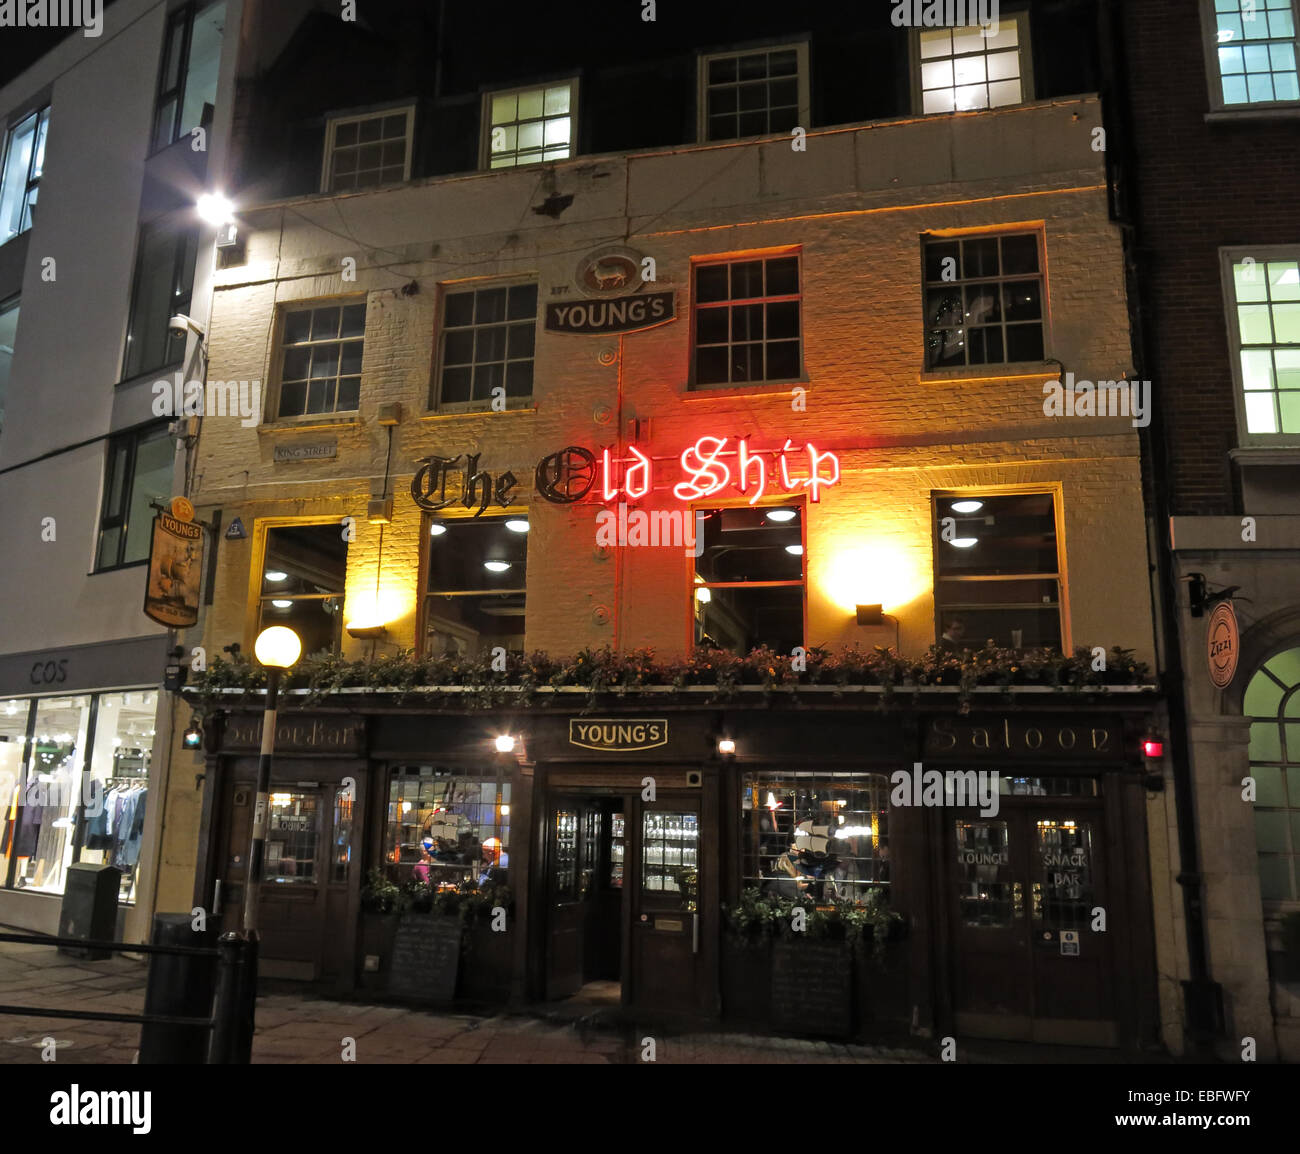 Das alte Schiff Pub, Youngs, Richmond, London bei Nacht Stockfoto